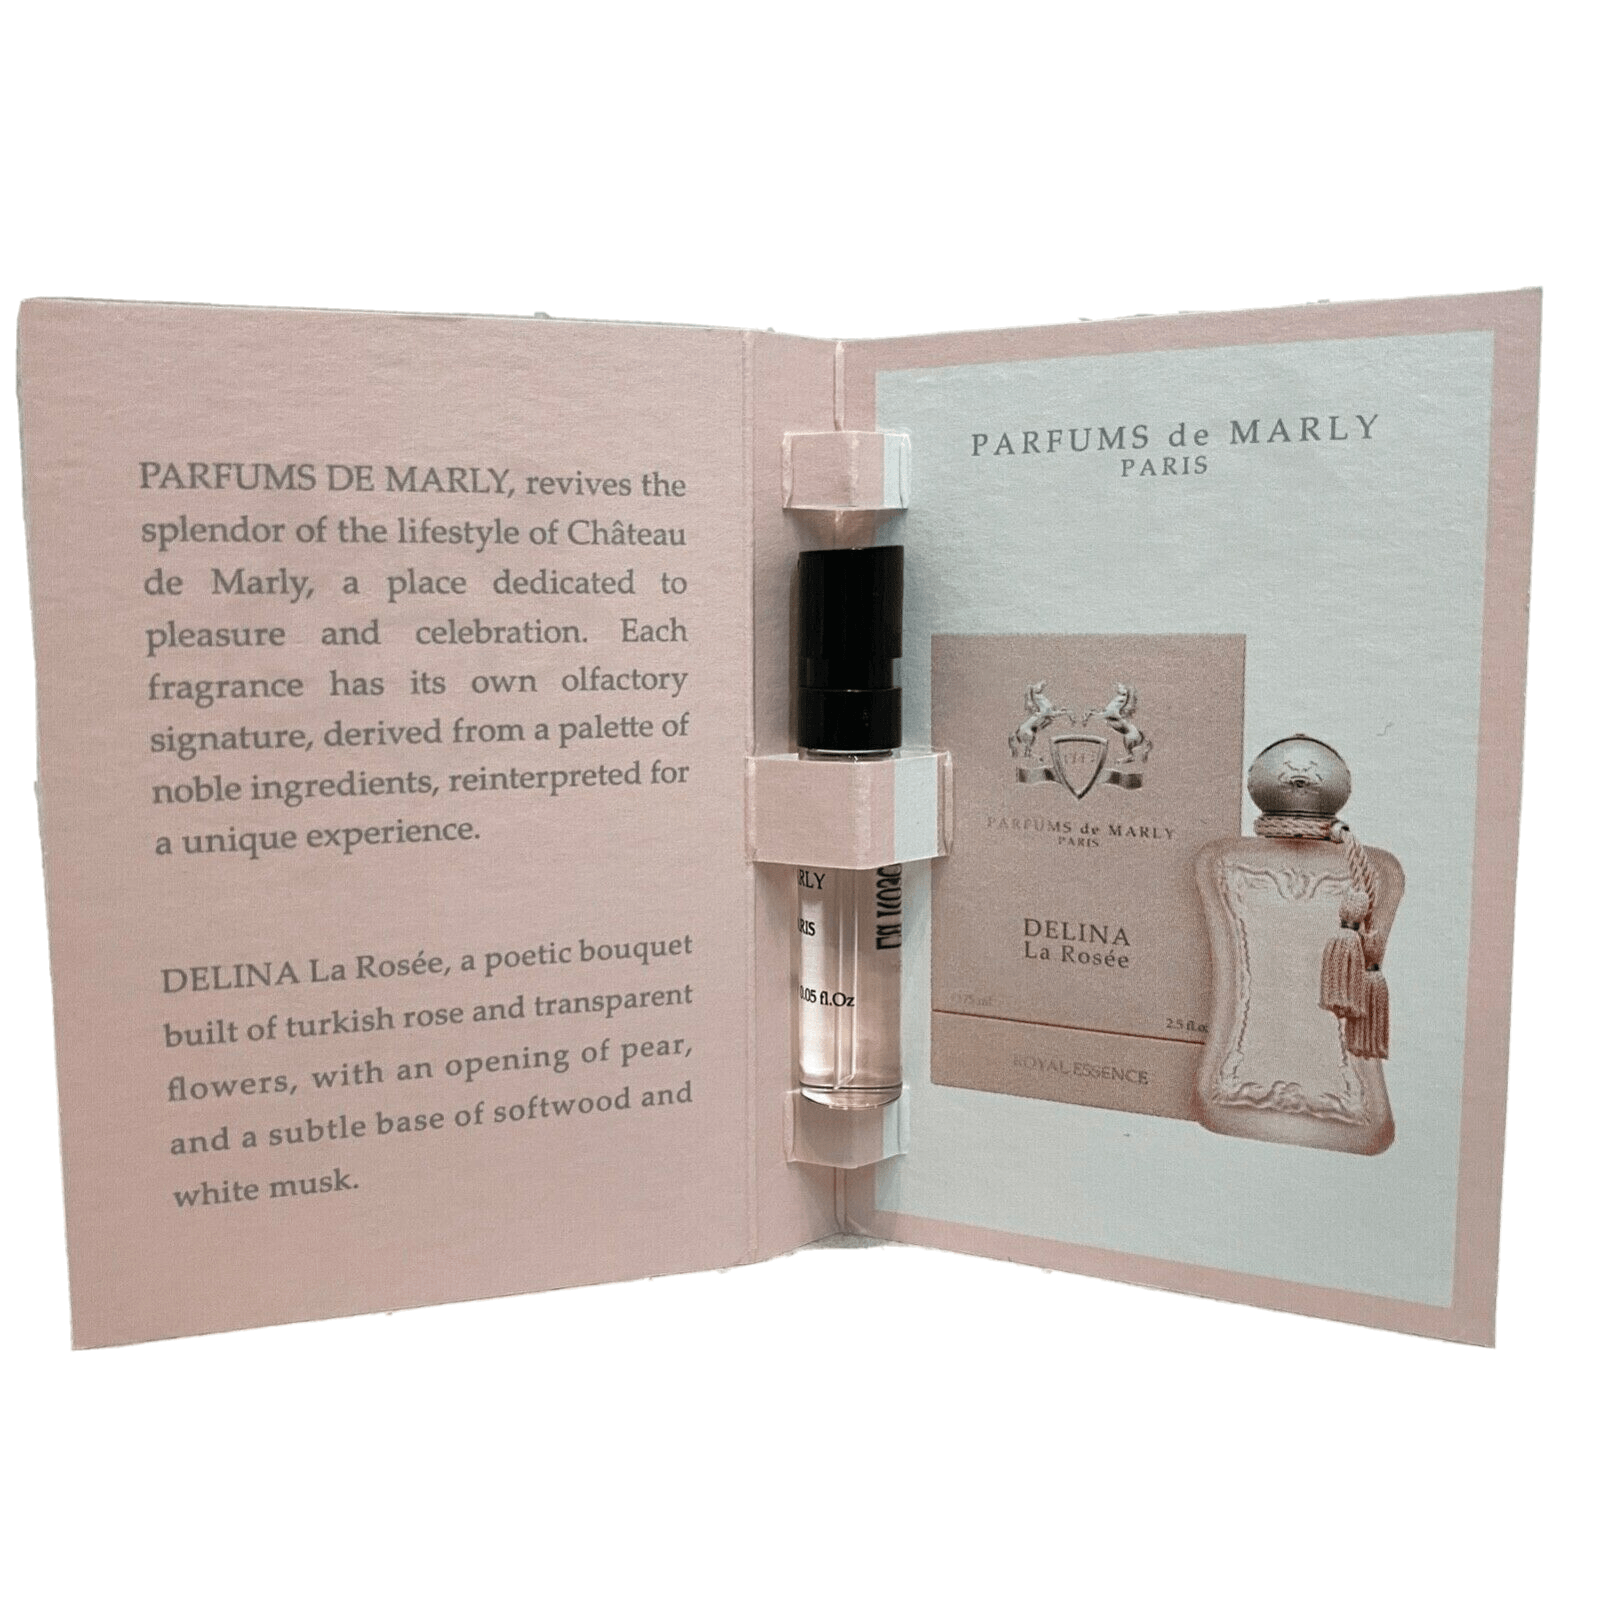 Parfums De Marly Delina La Rosee ametlik parfüümi näidis 1.5ml 0.05 fl. oz